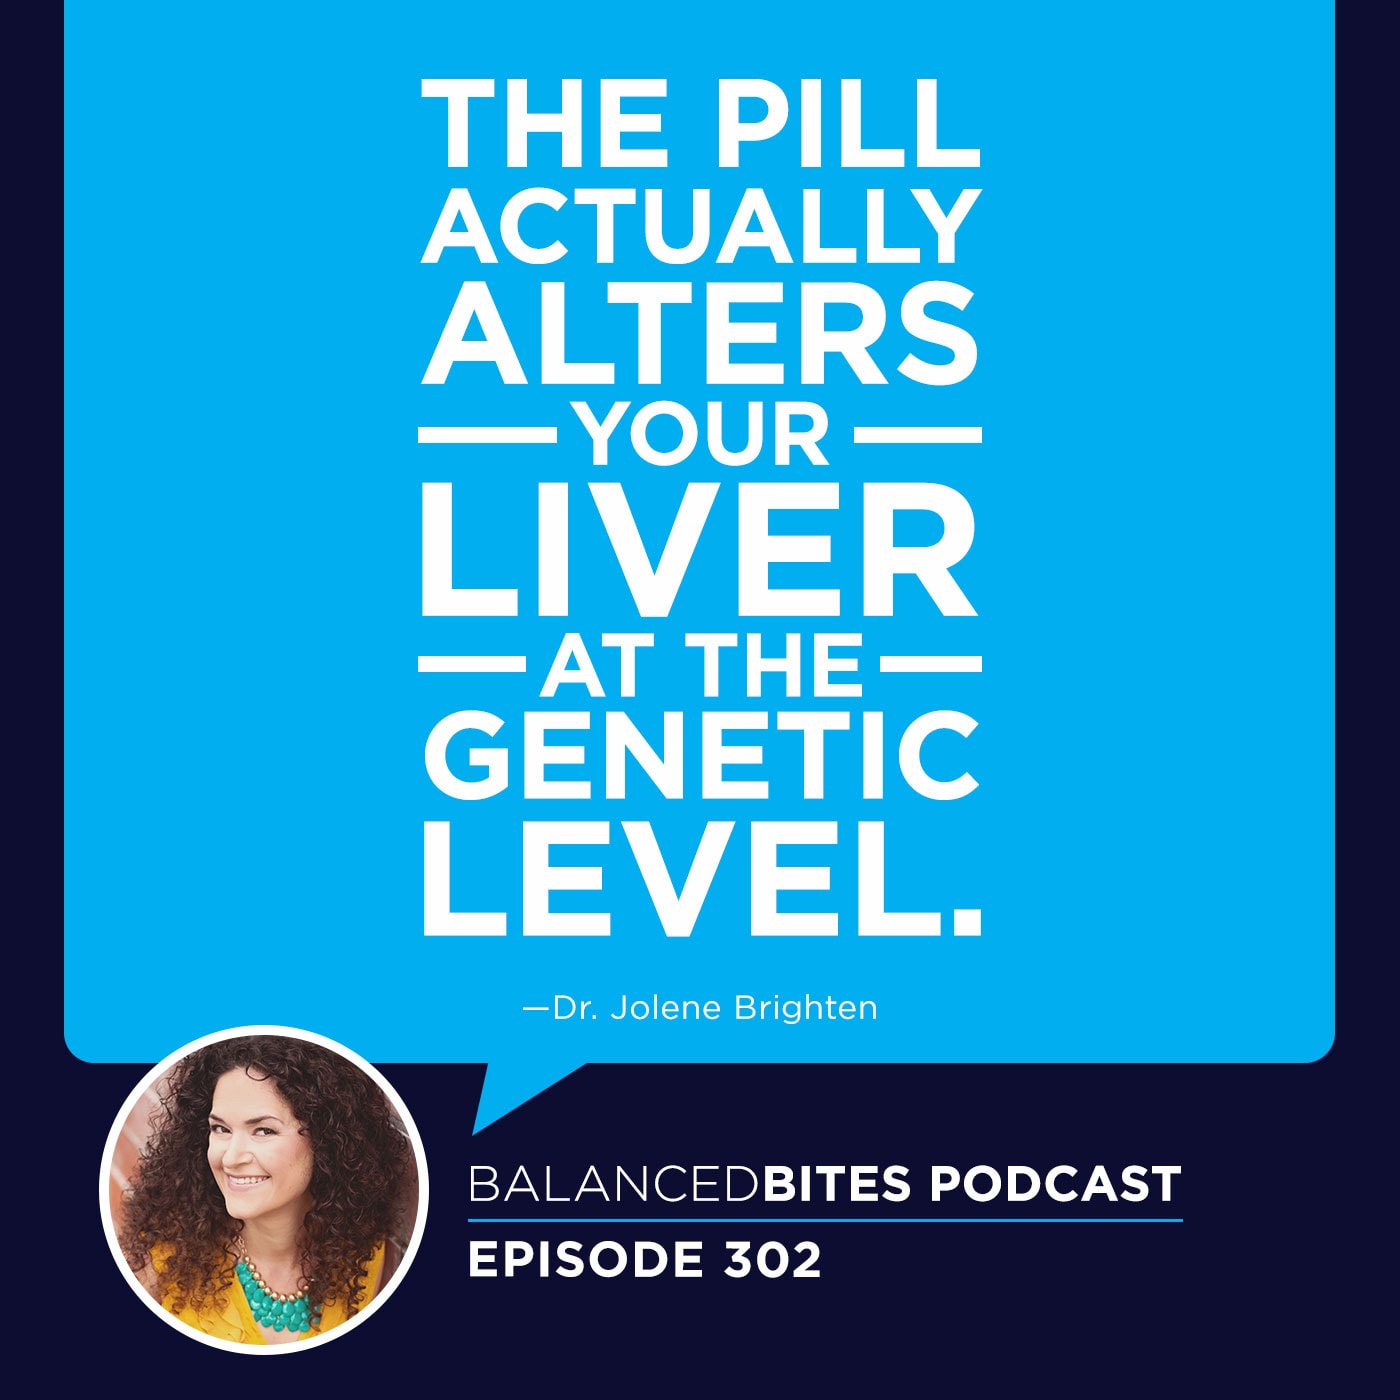 Diane Sanfilippo & Liz Wolfe | Balanced Bites Podcast | Self-Love & Adrenals, Stress & Alcohol, Hormones & Birth Control with Dr. Jolene Brighten